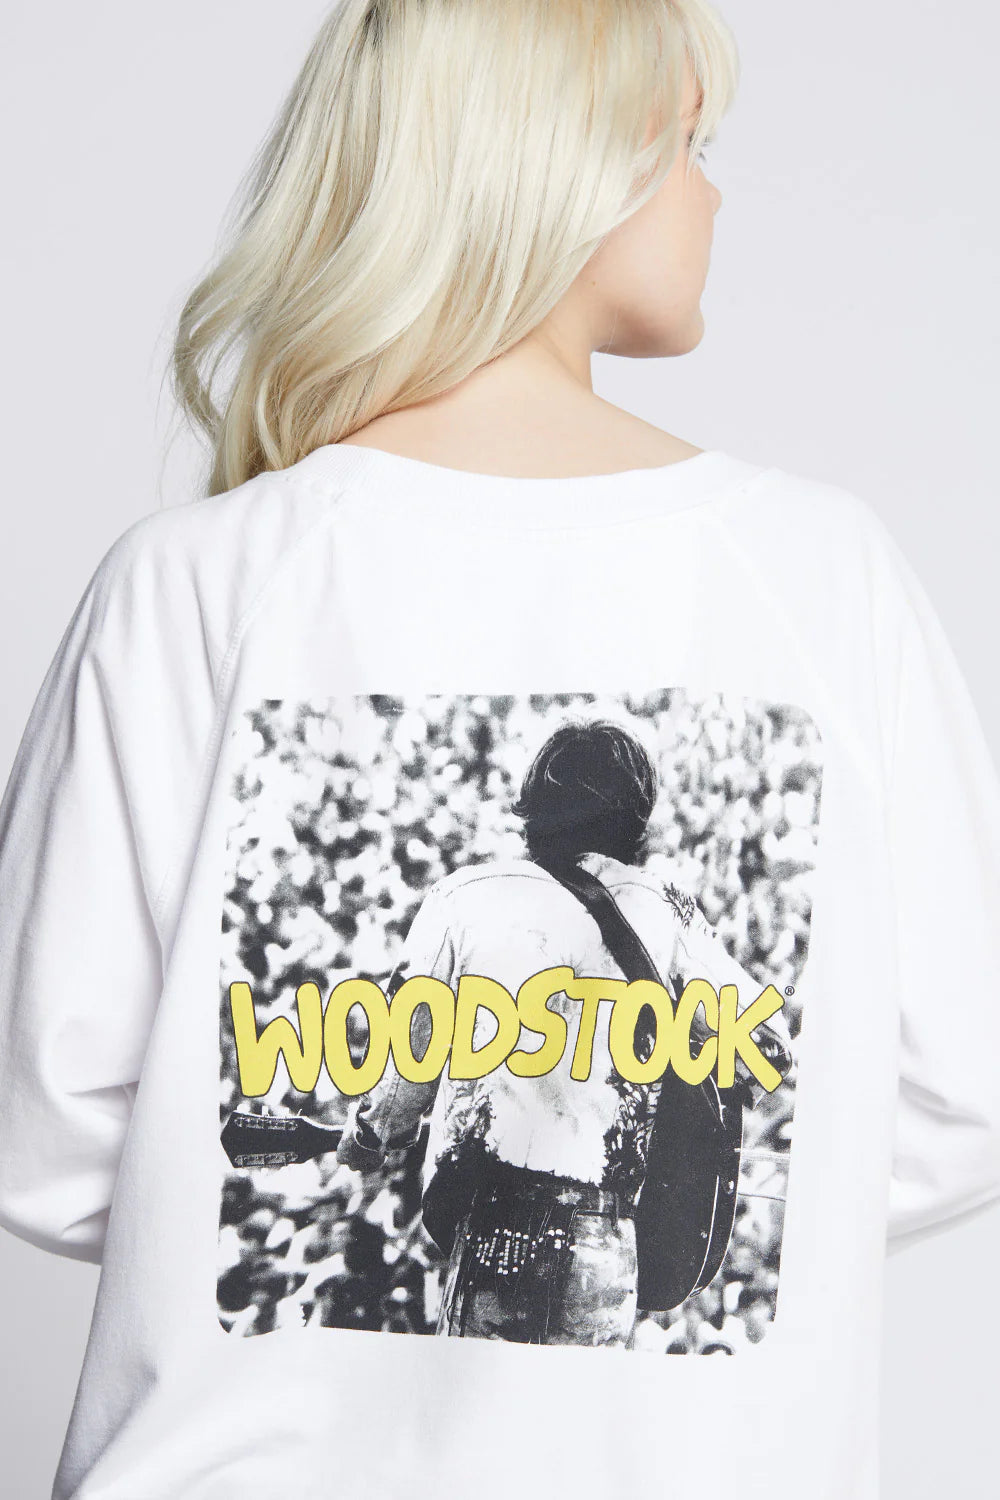 Woodstock Sweatshirt